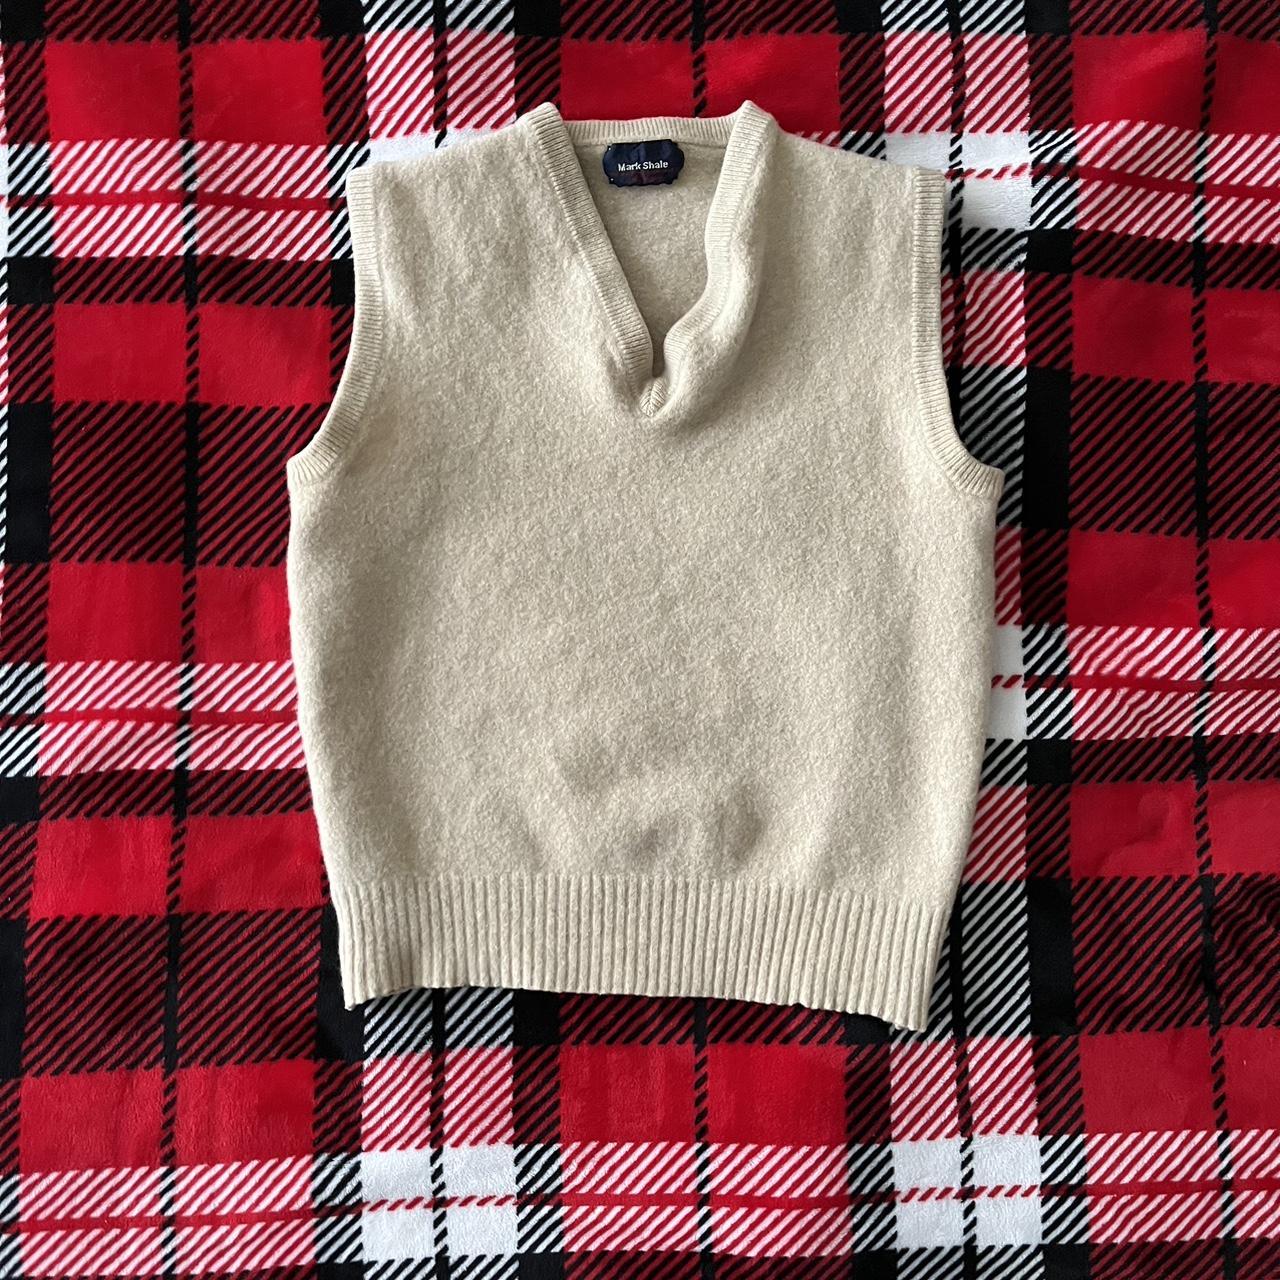 Small 100% wool light sweater vest in excellent... - Depop